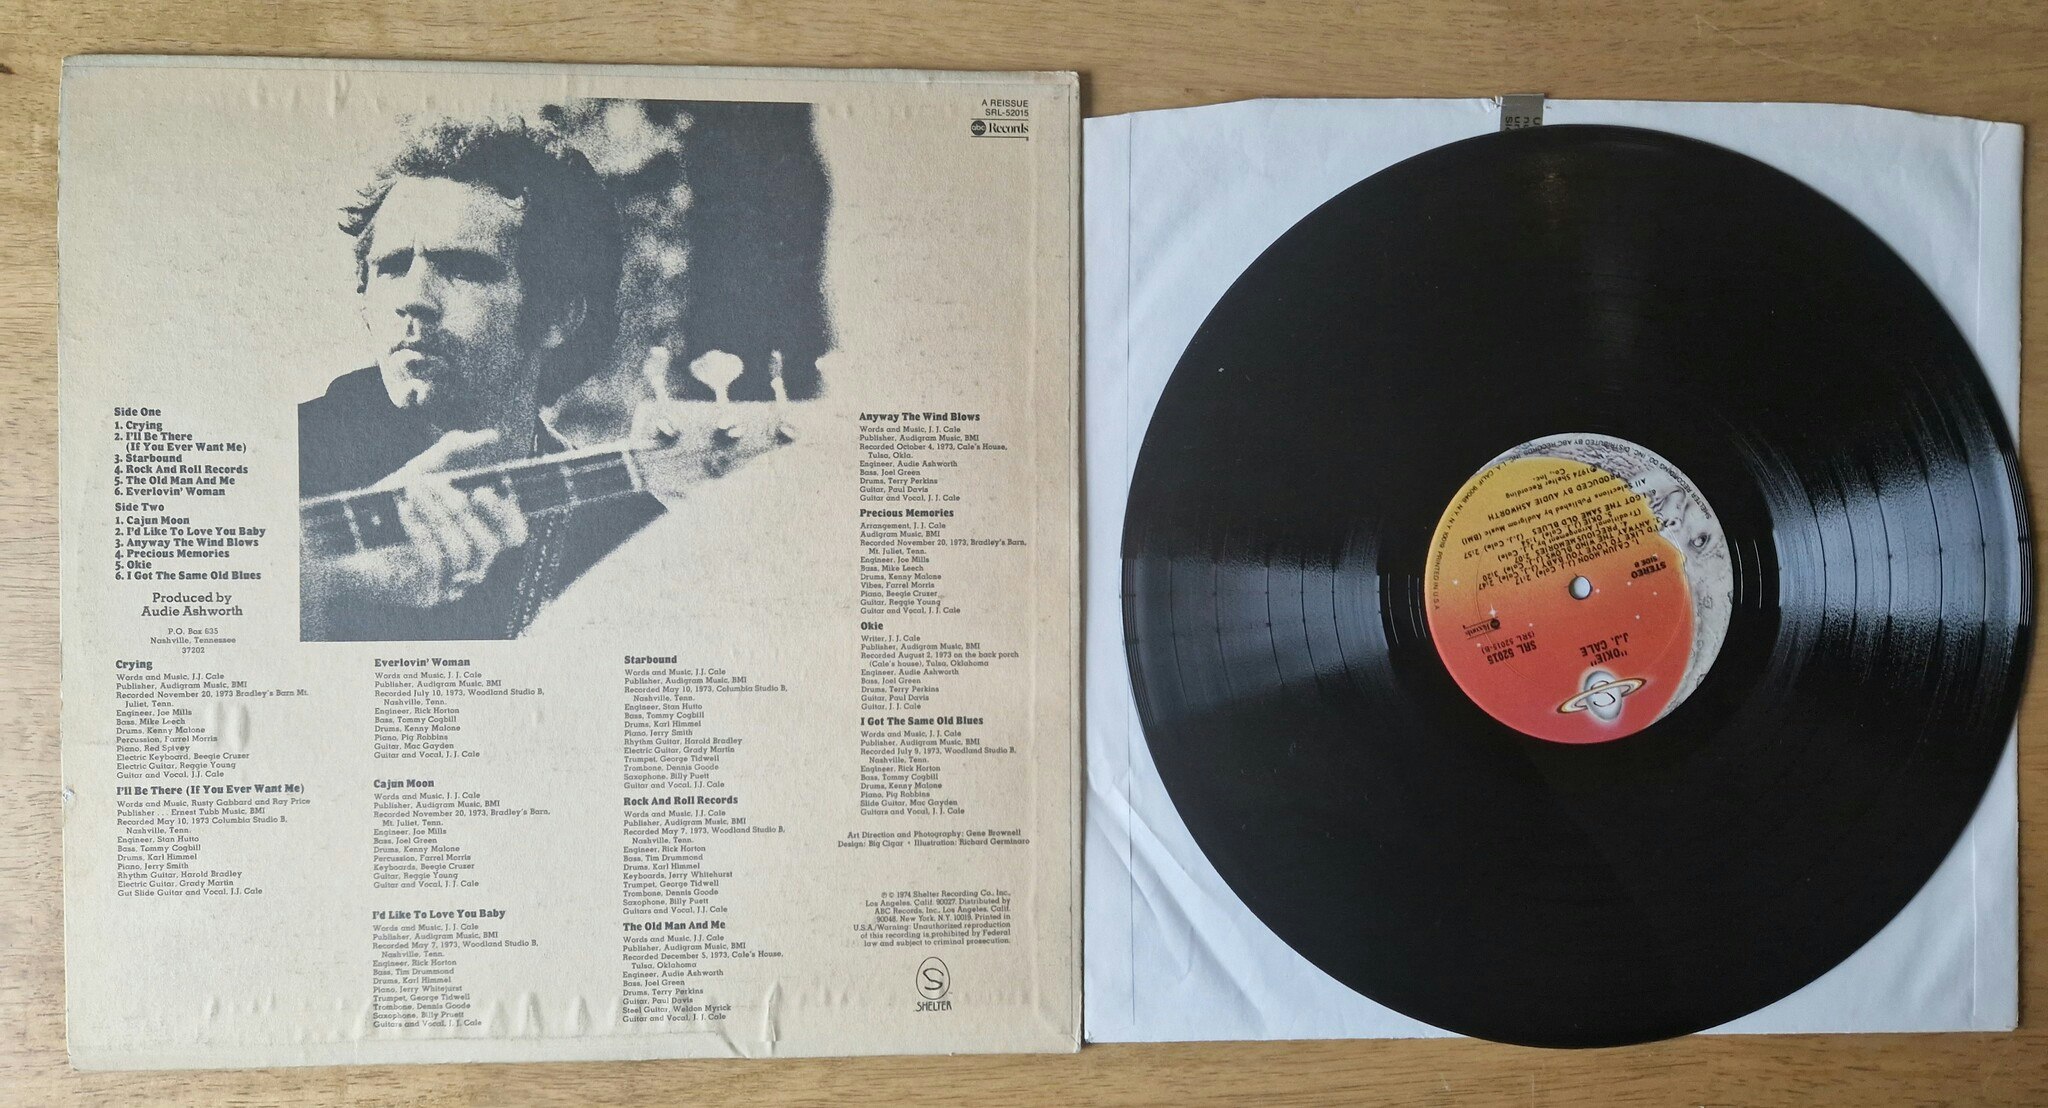 J.J. Cale, Naturally. Vinyl LP